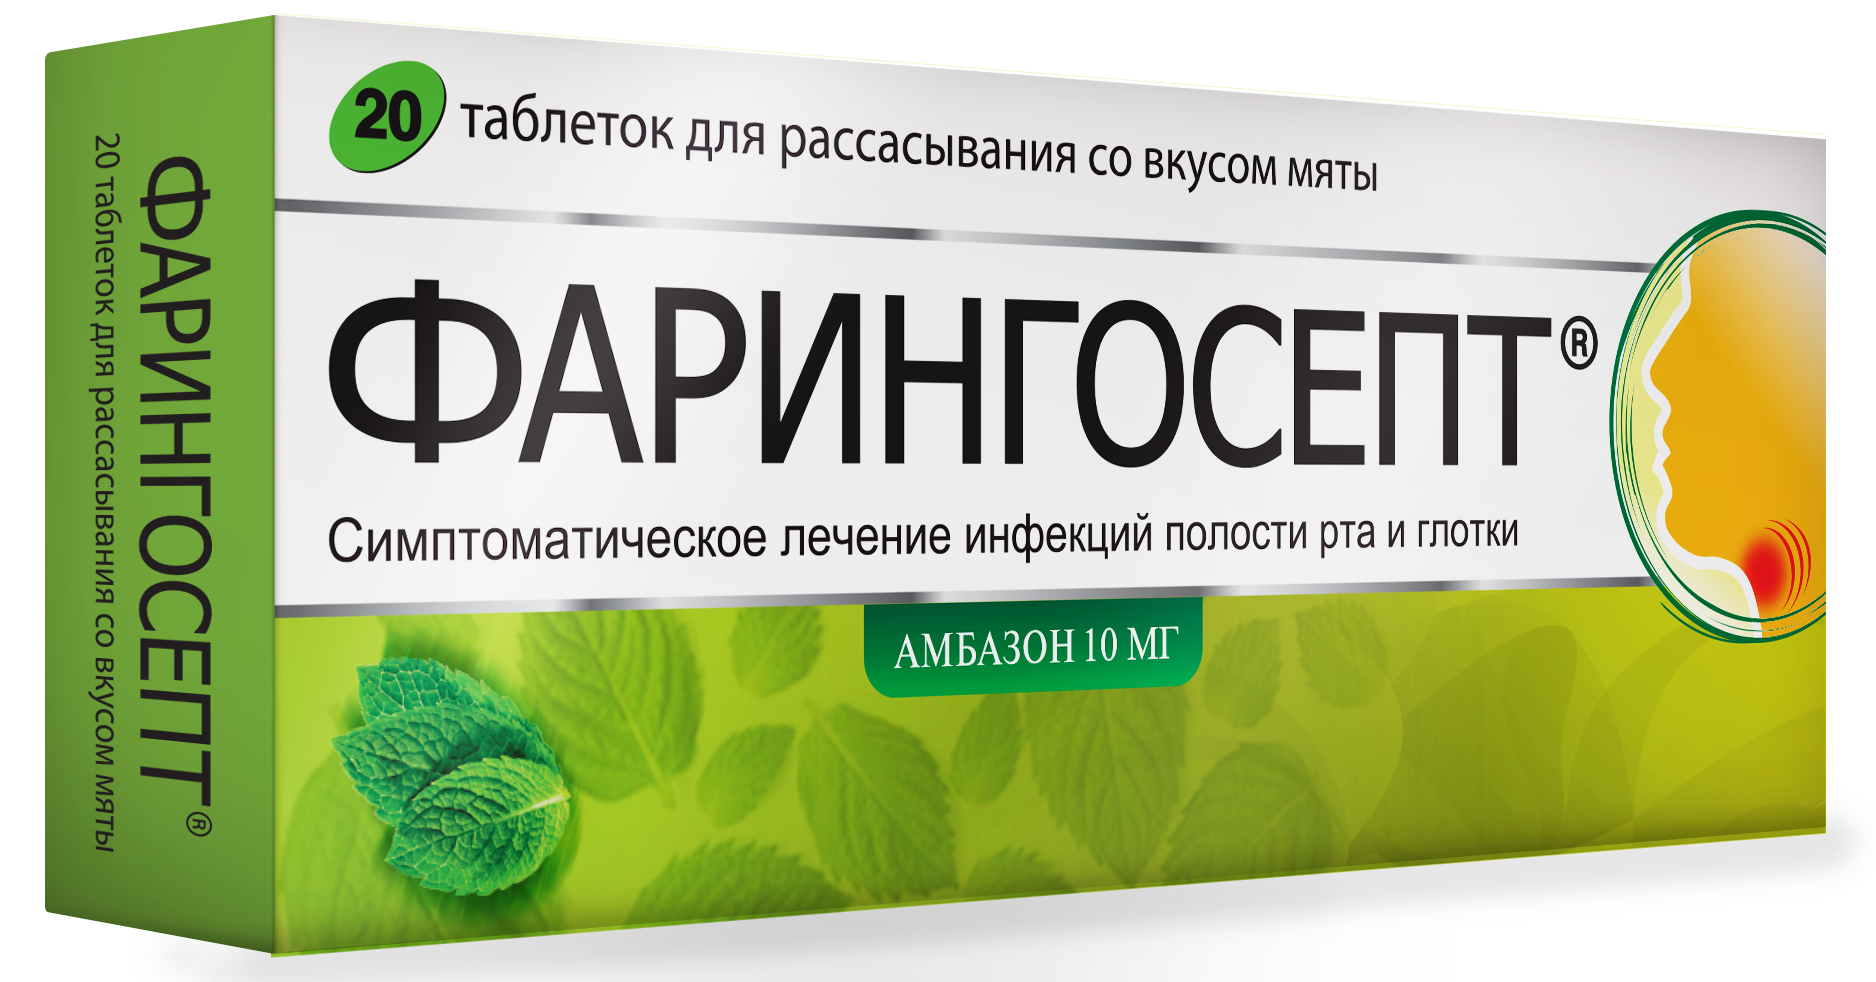 Фарингосепт, таблетки для рассасывания (мята) 10 мг, 20 шт. ренгалин таблетки для рассасывания 20шт